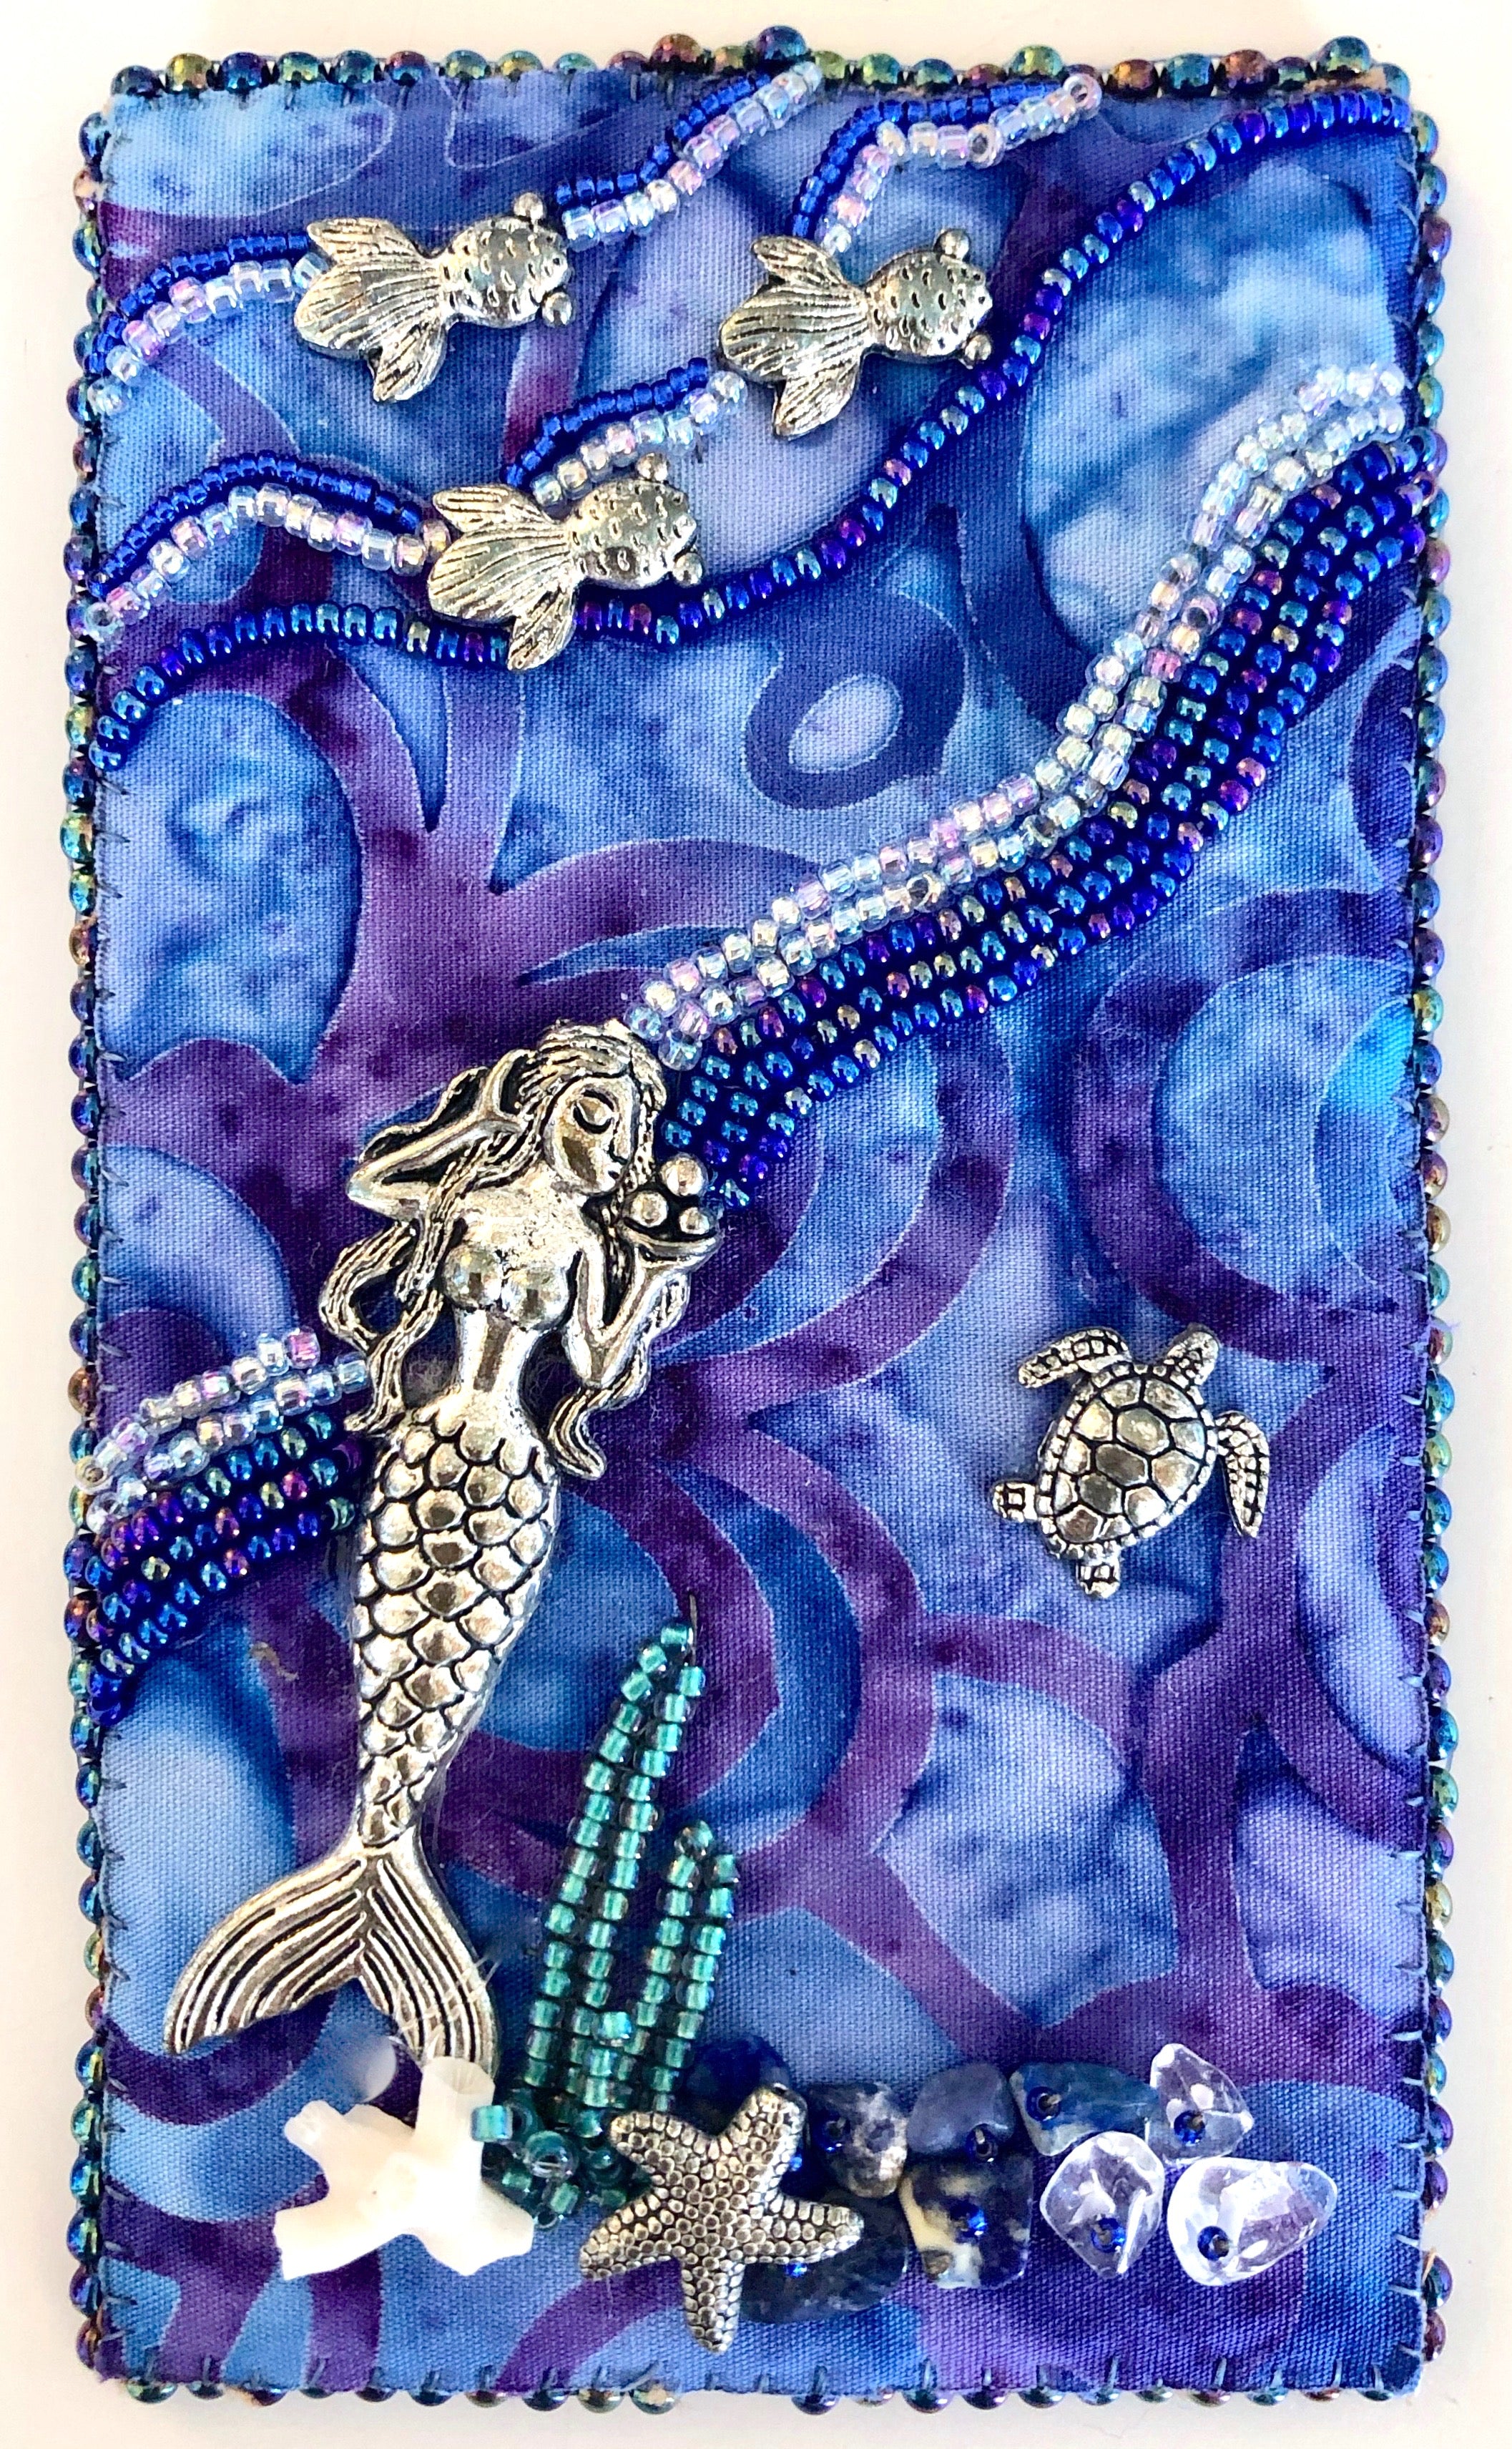 Mia the Mermaid Beaded Embroidery Kit - Island Cove Beads & Gallery